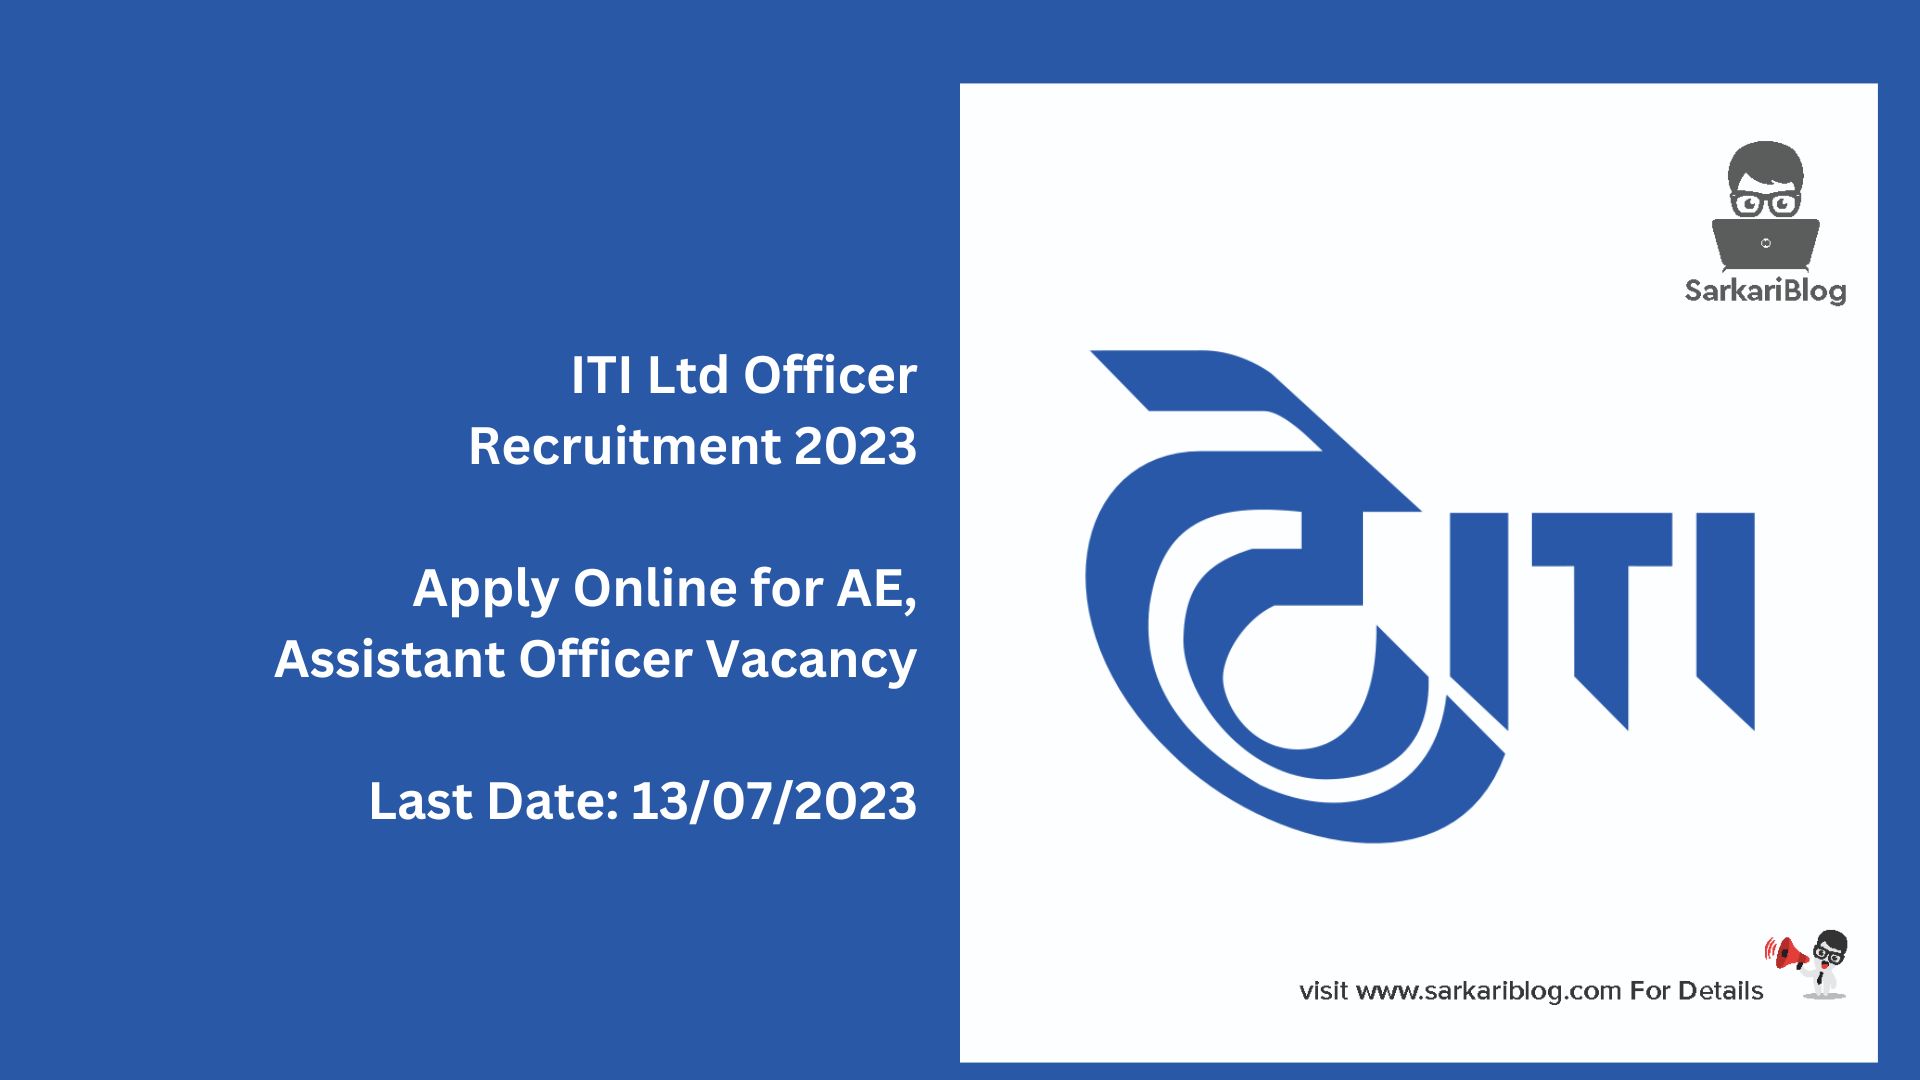 ITI Ltd Officer Recruitment 2023